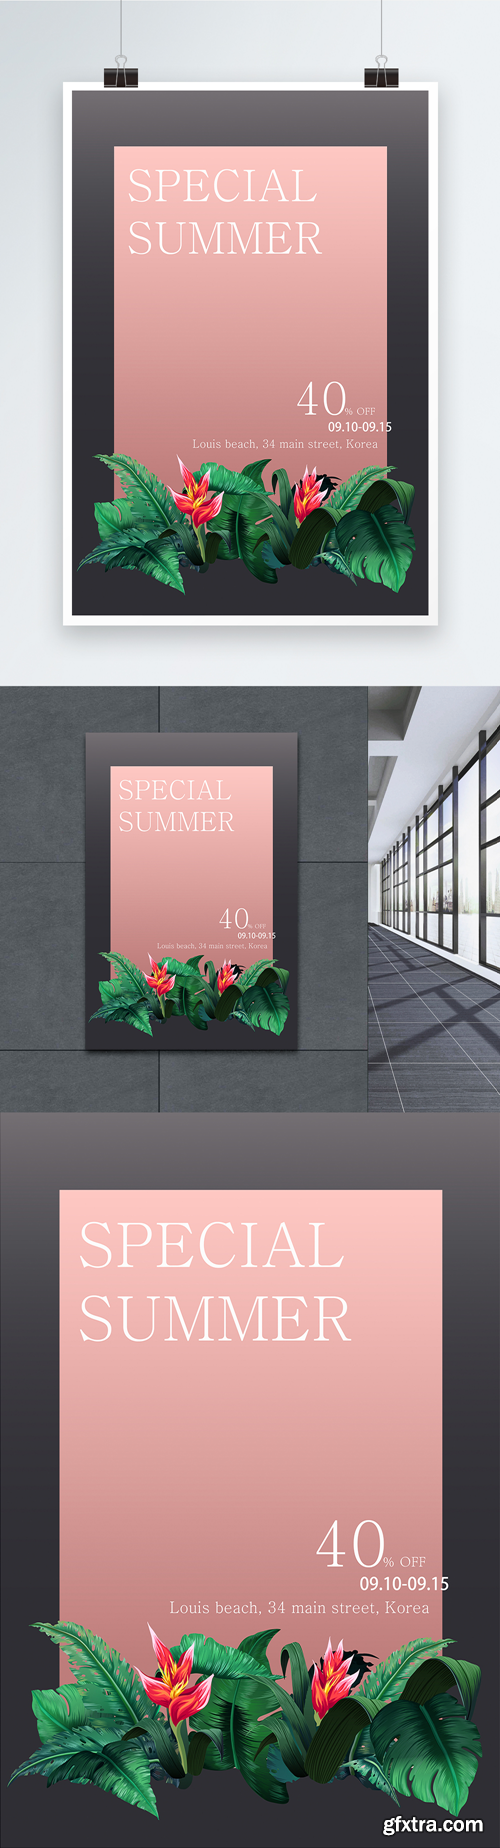 elegant summer promotional posters